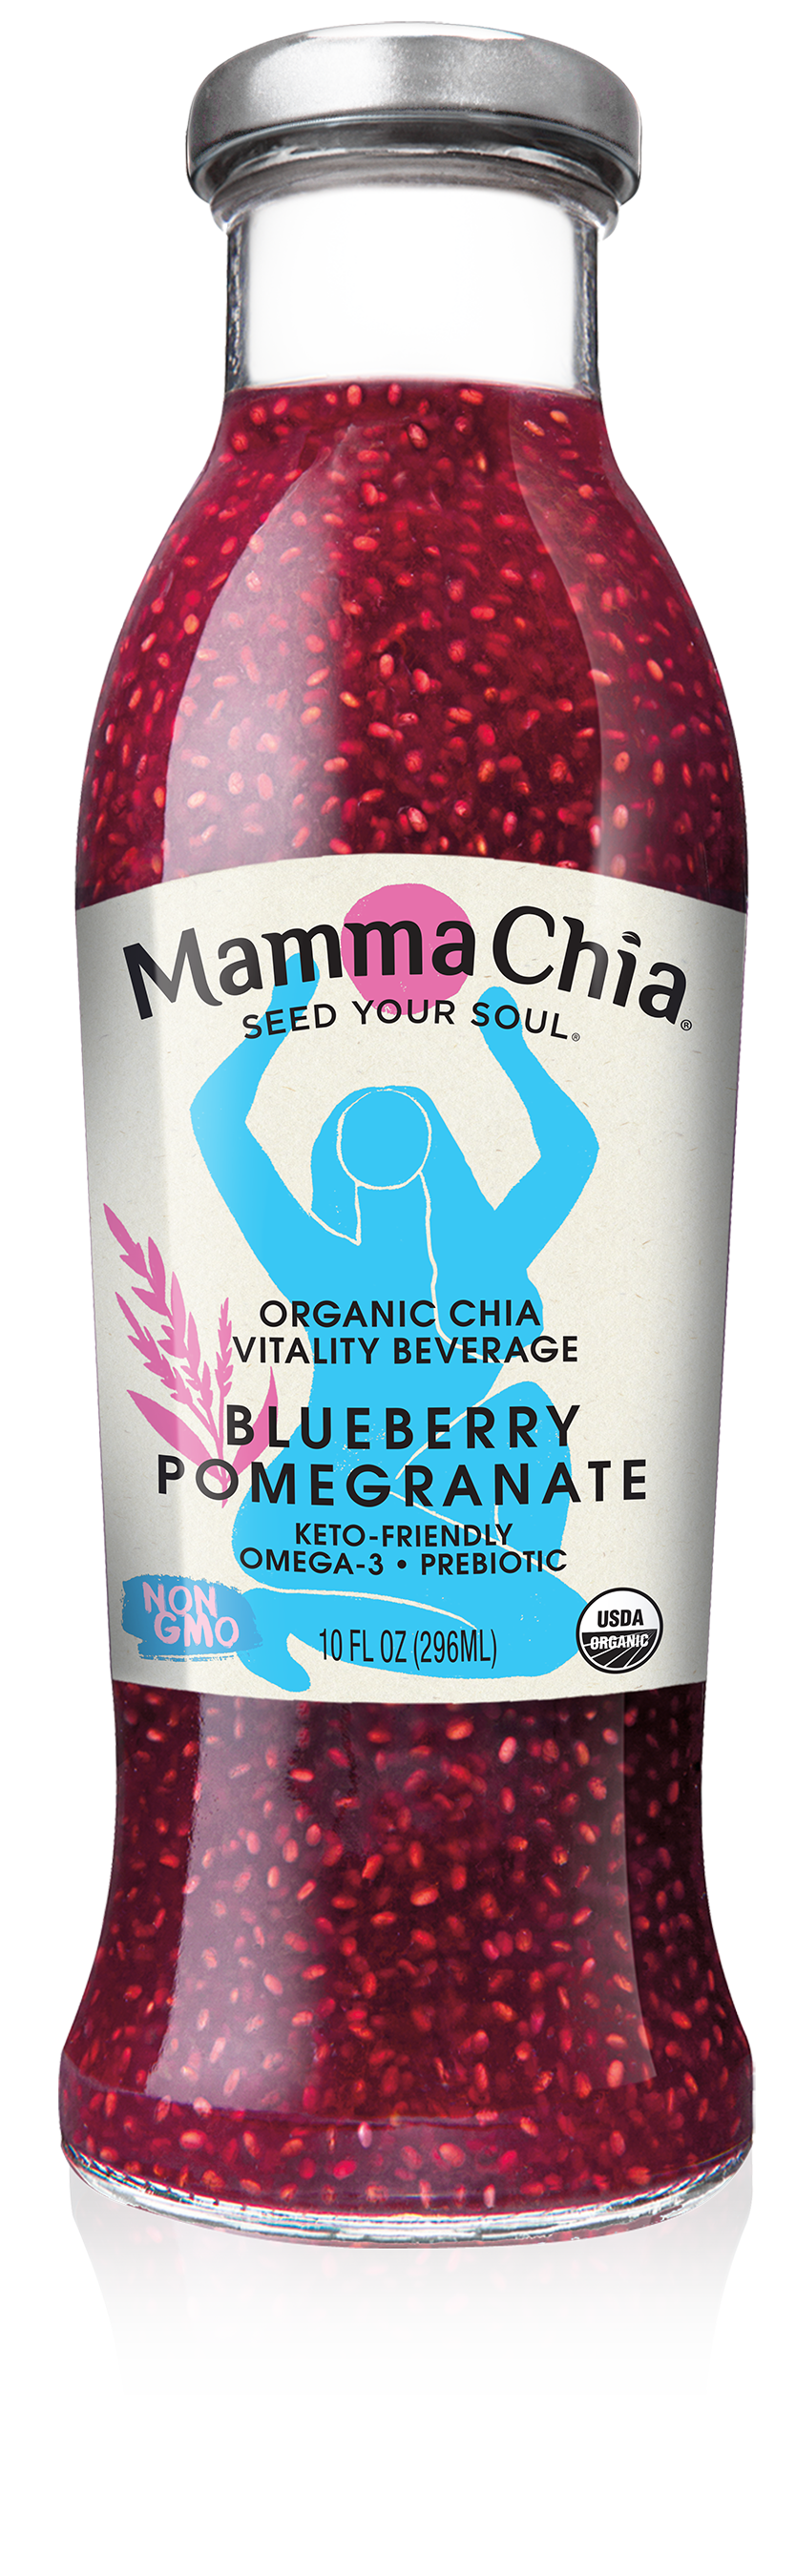 Mamma Chia Blueberry Pomegranate Organic Chia Beverage 12 units per case 10.0 fl